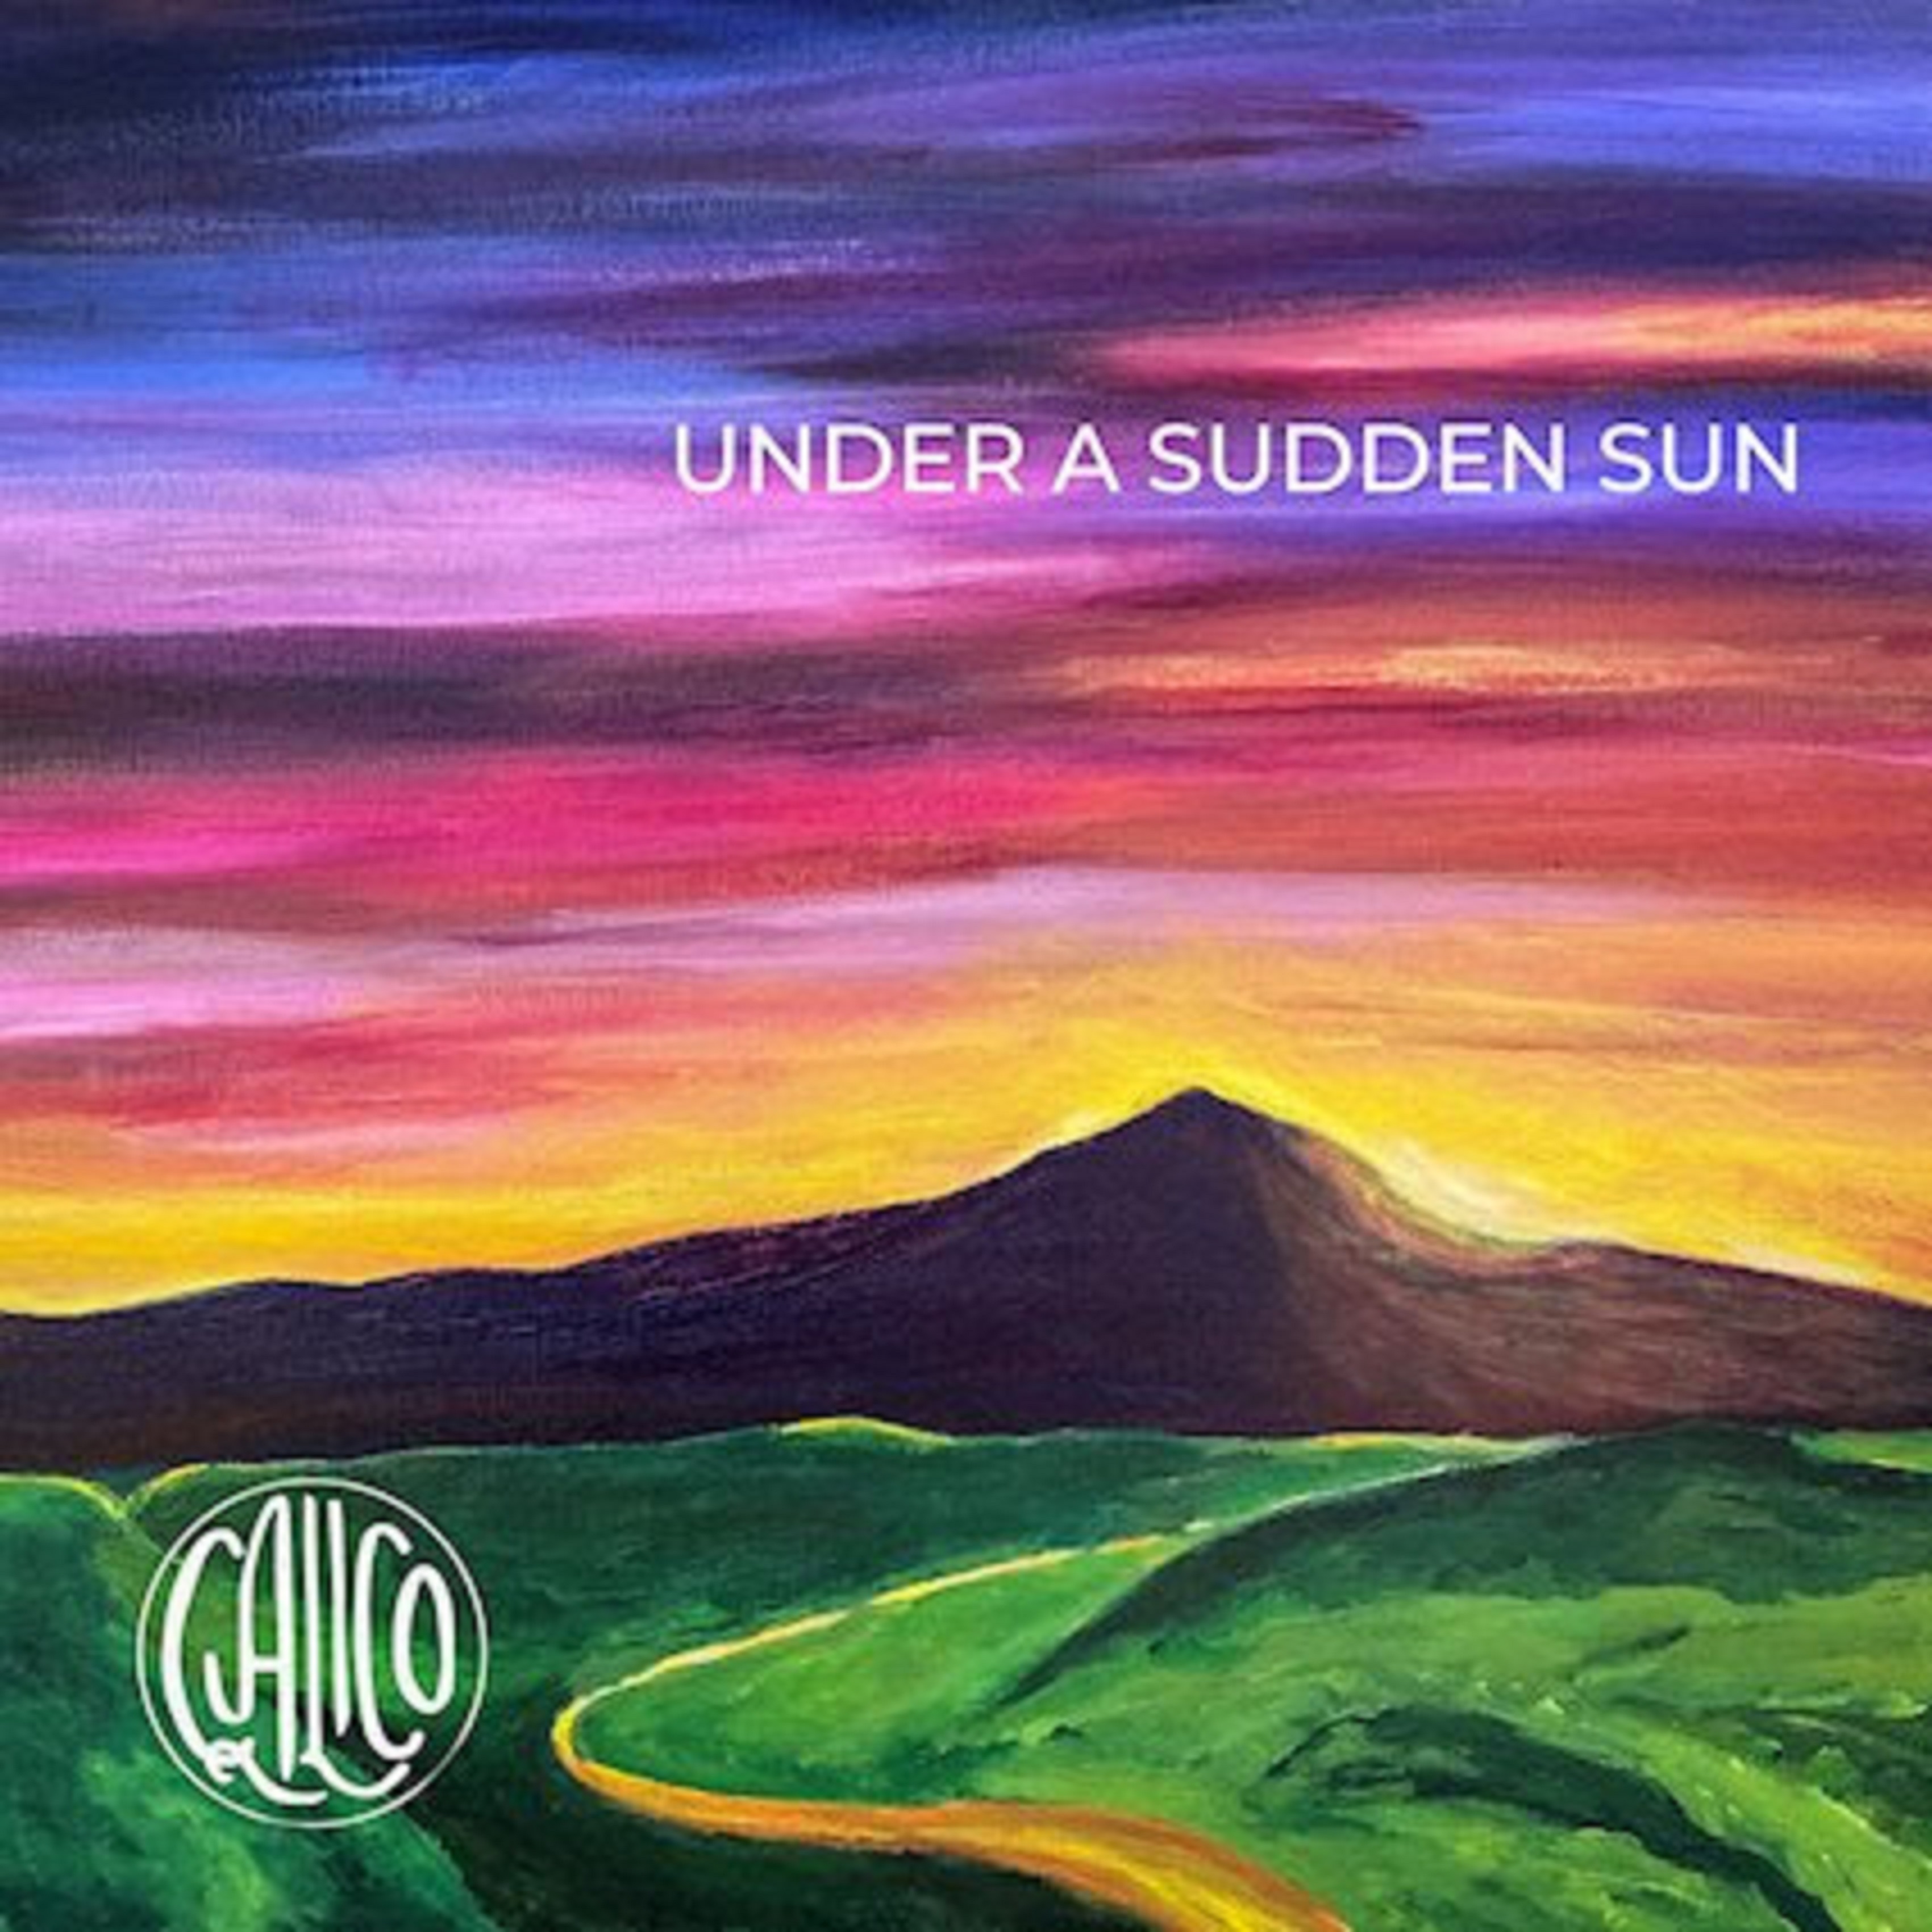 CALICO release their meditative Americana/folk album "Under a Sudden Sun"